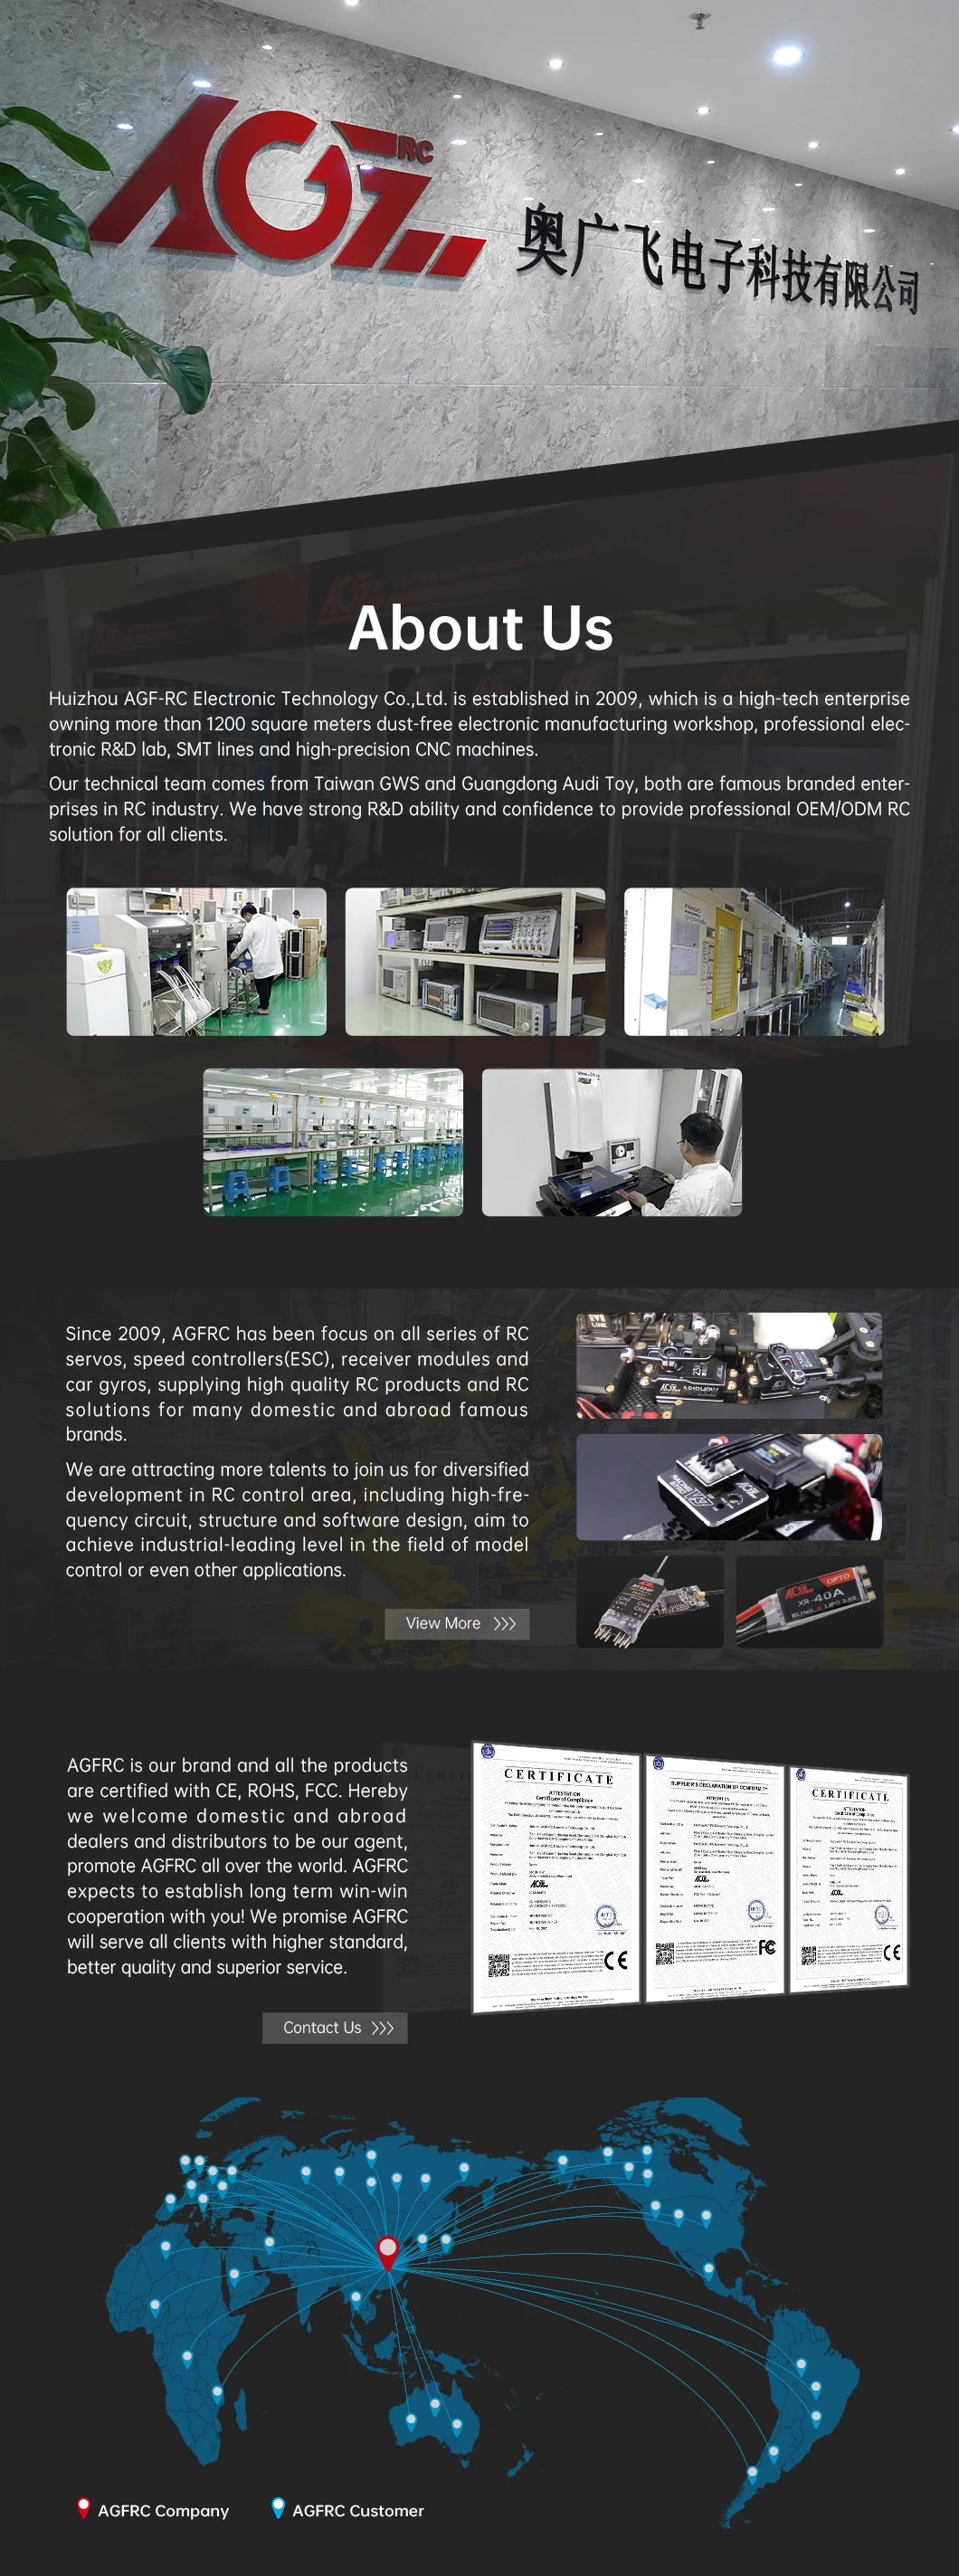 AGFRC A280BHMW , Huizhou AGF-RC Electronic Technology Co-,Ltd. is a